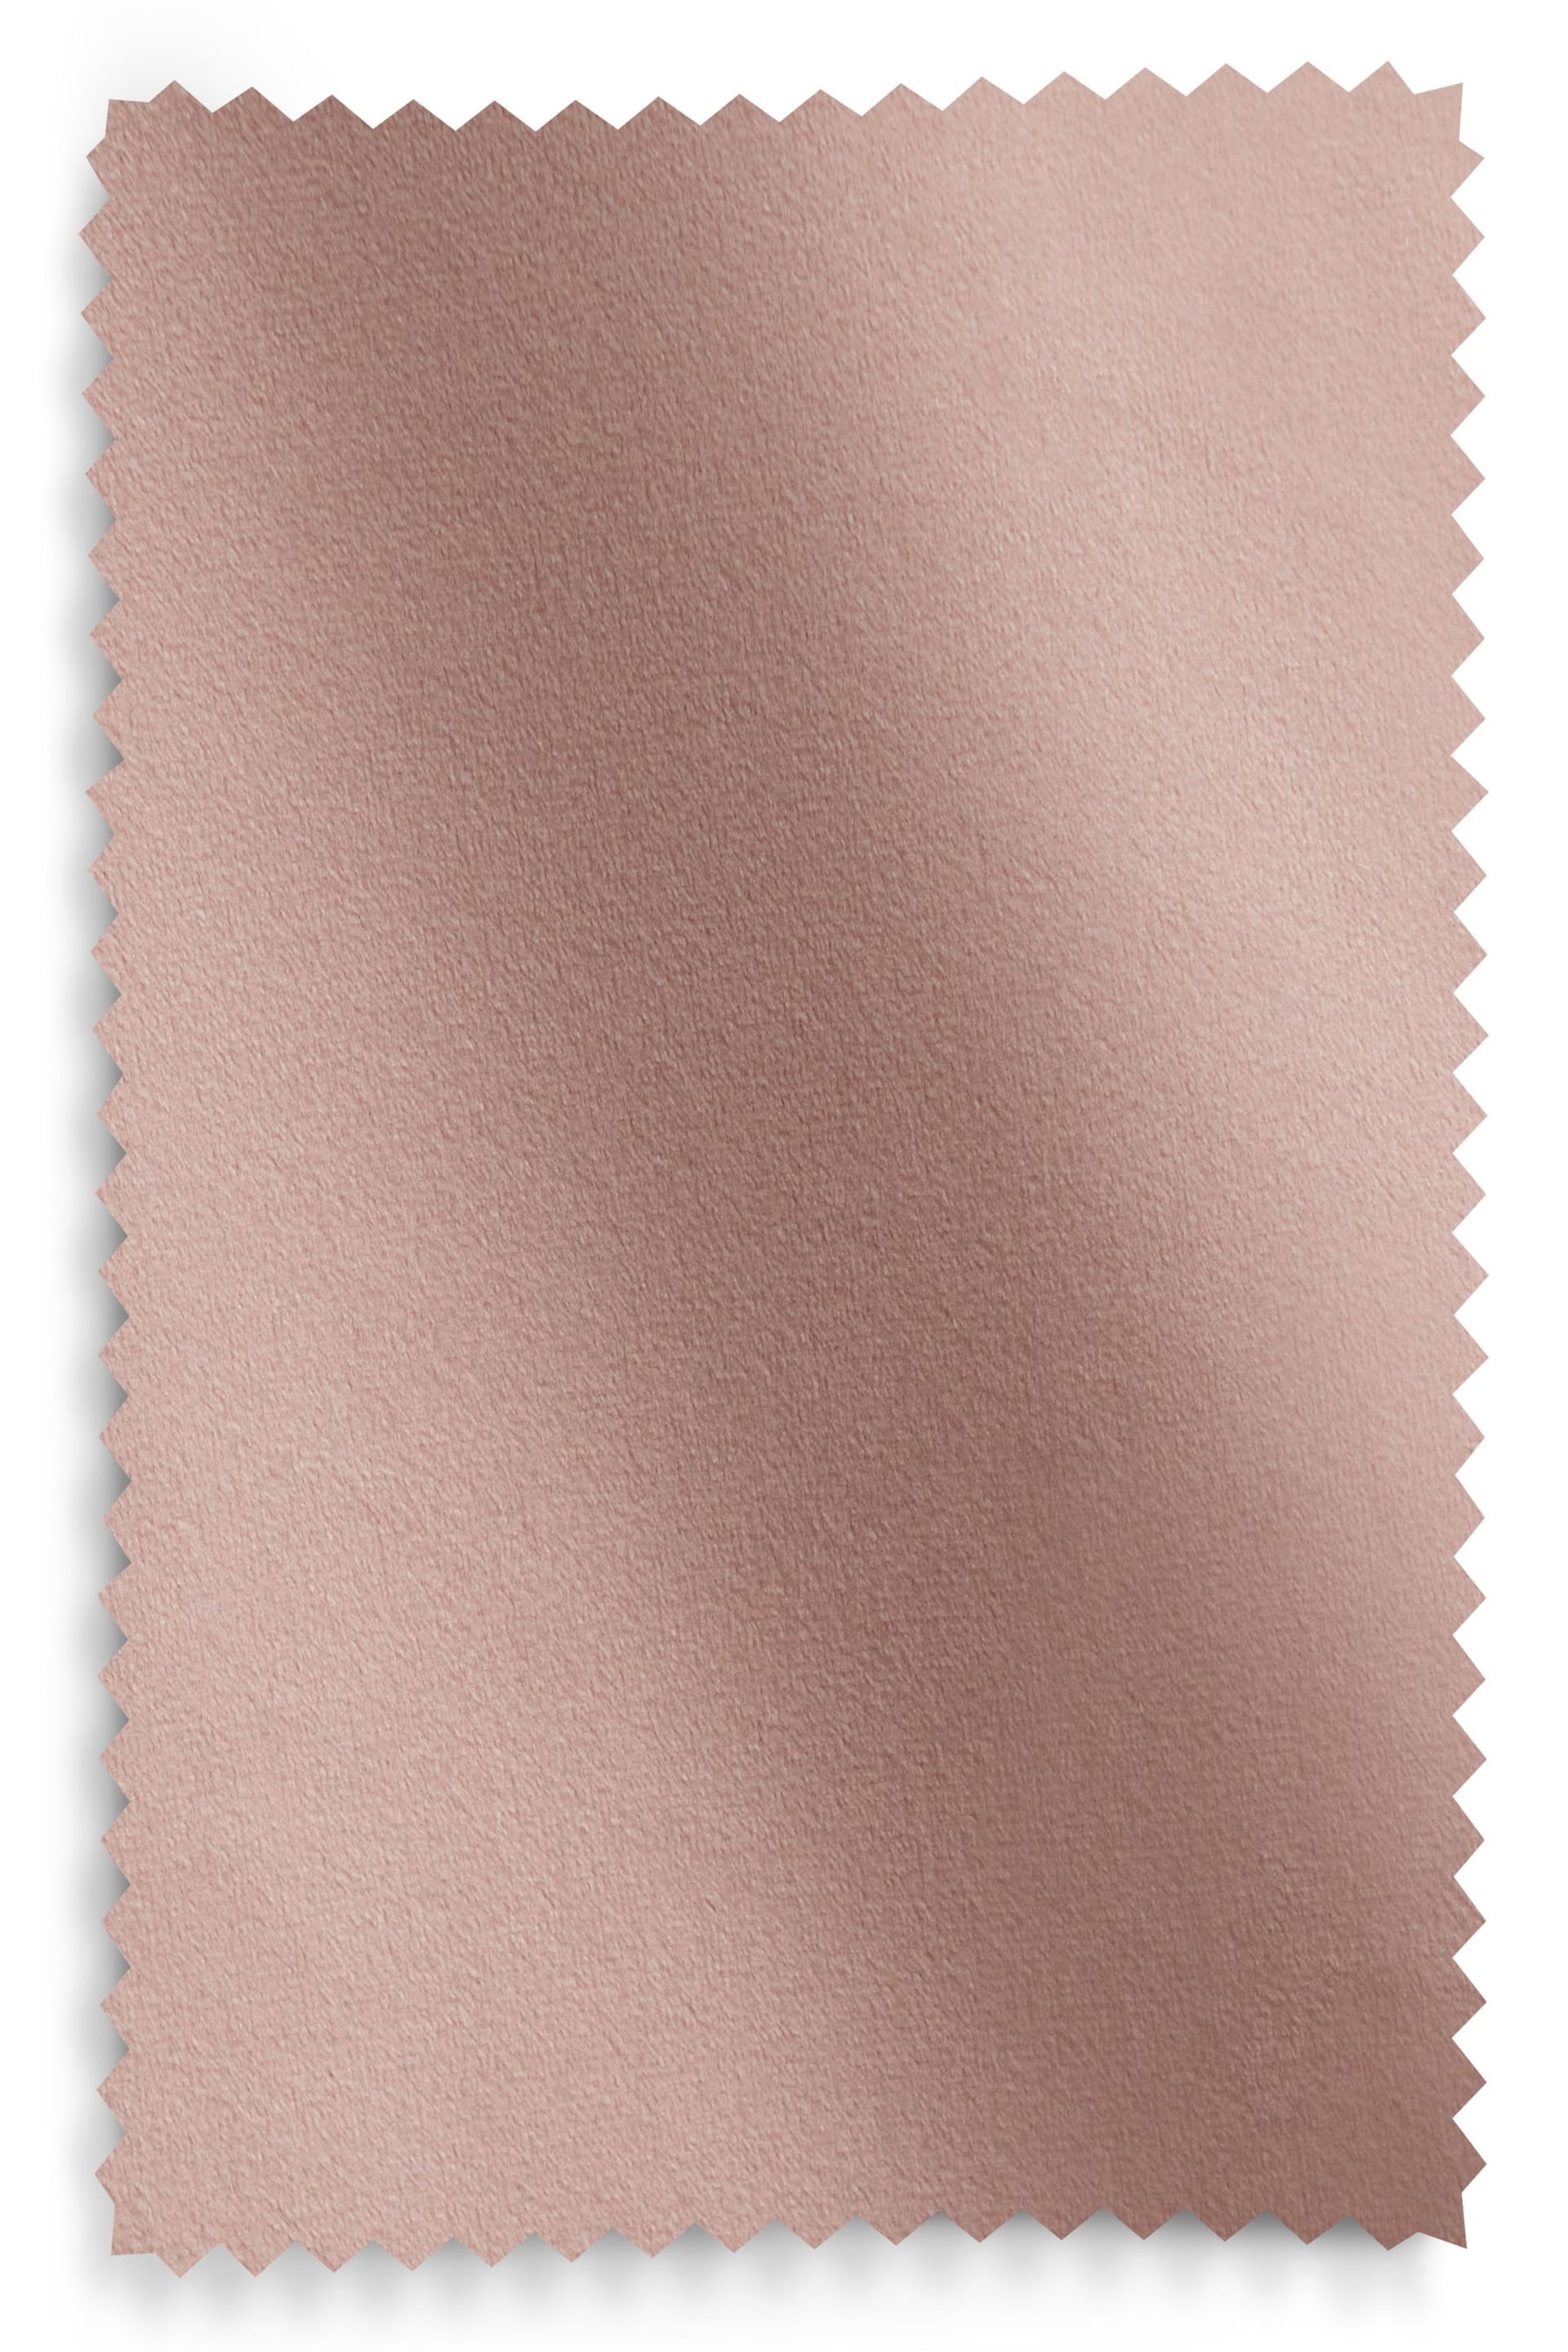 Blush Pink Matte Velvet Pencil Pleat Blackout/Thermal Curtains - Image 7 of 8